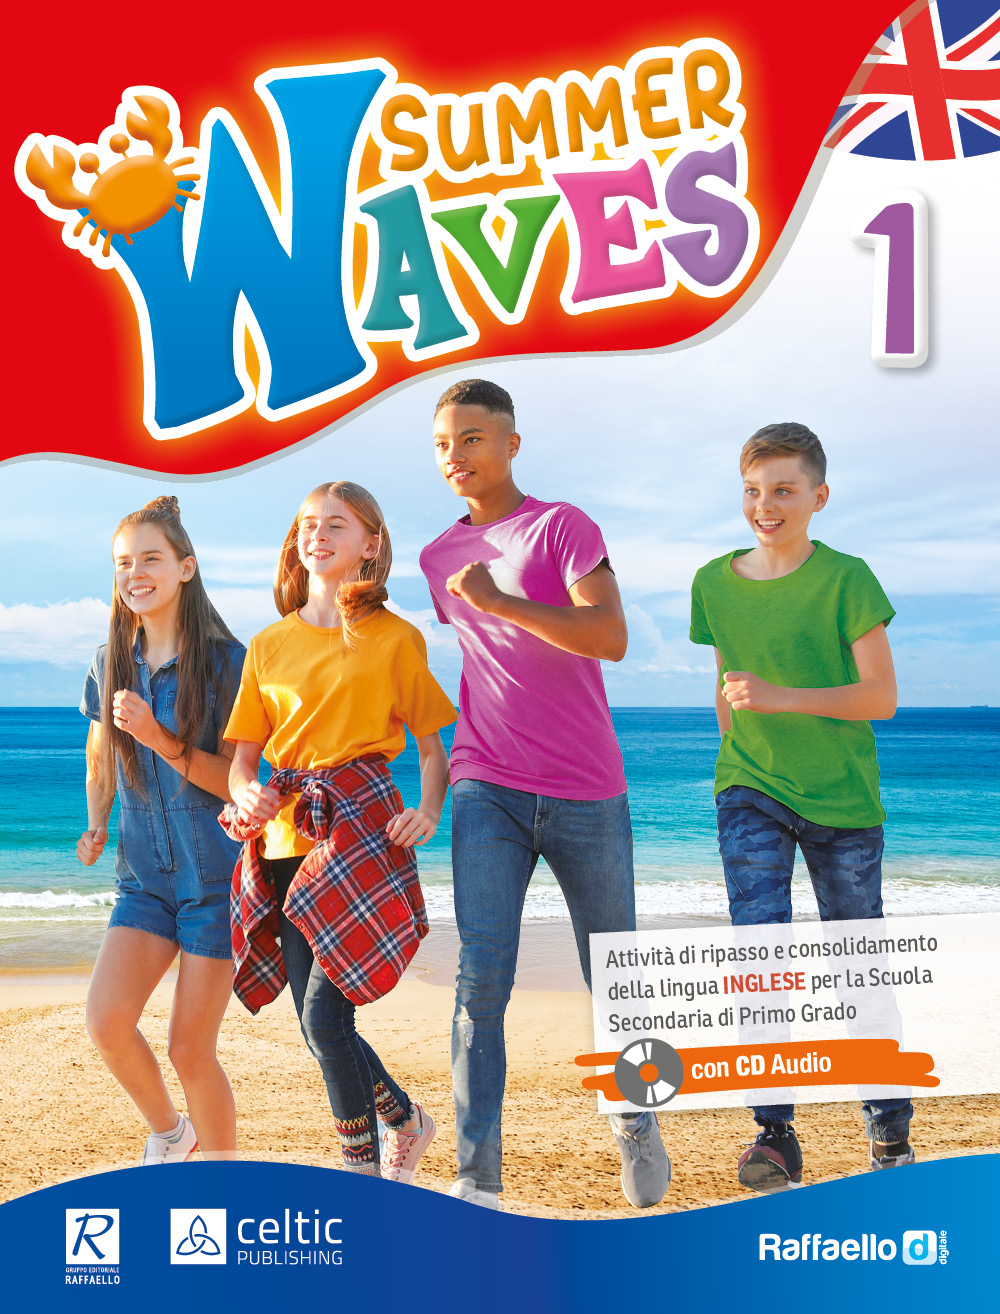 Summer Waves - Celtic Publishing